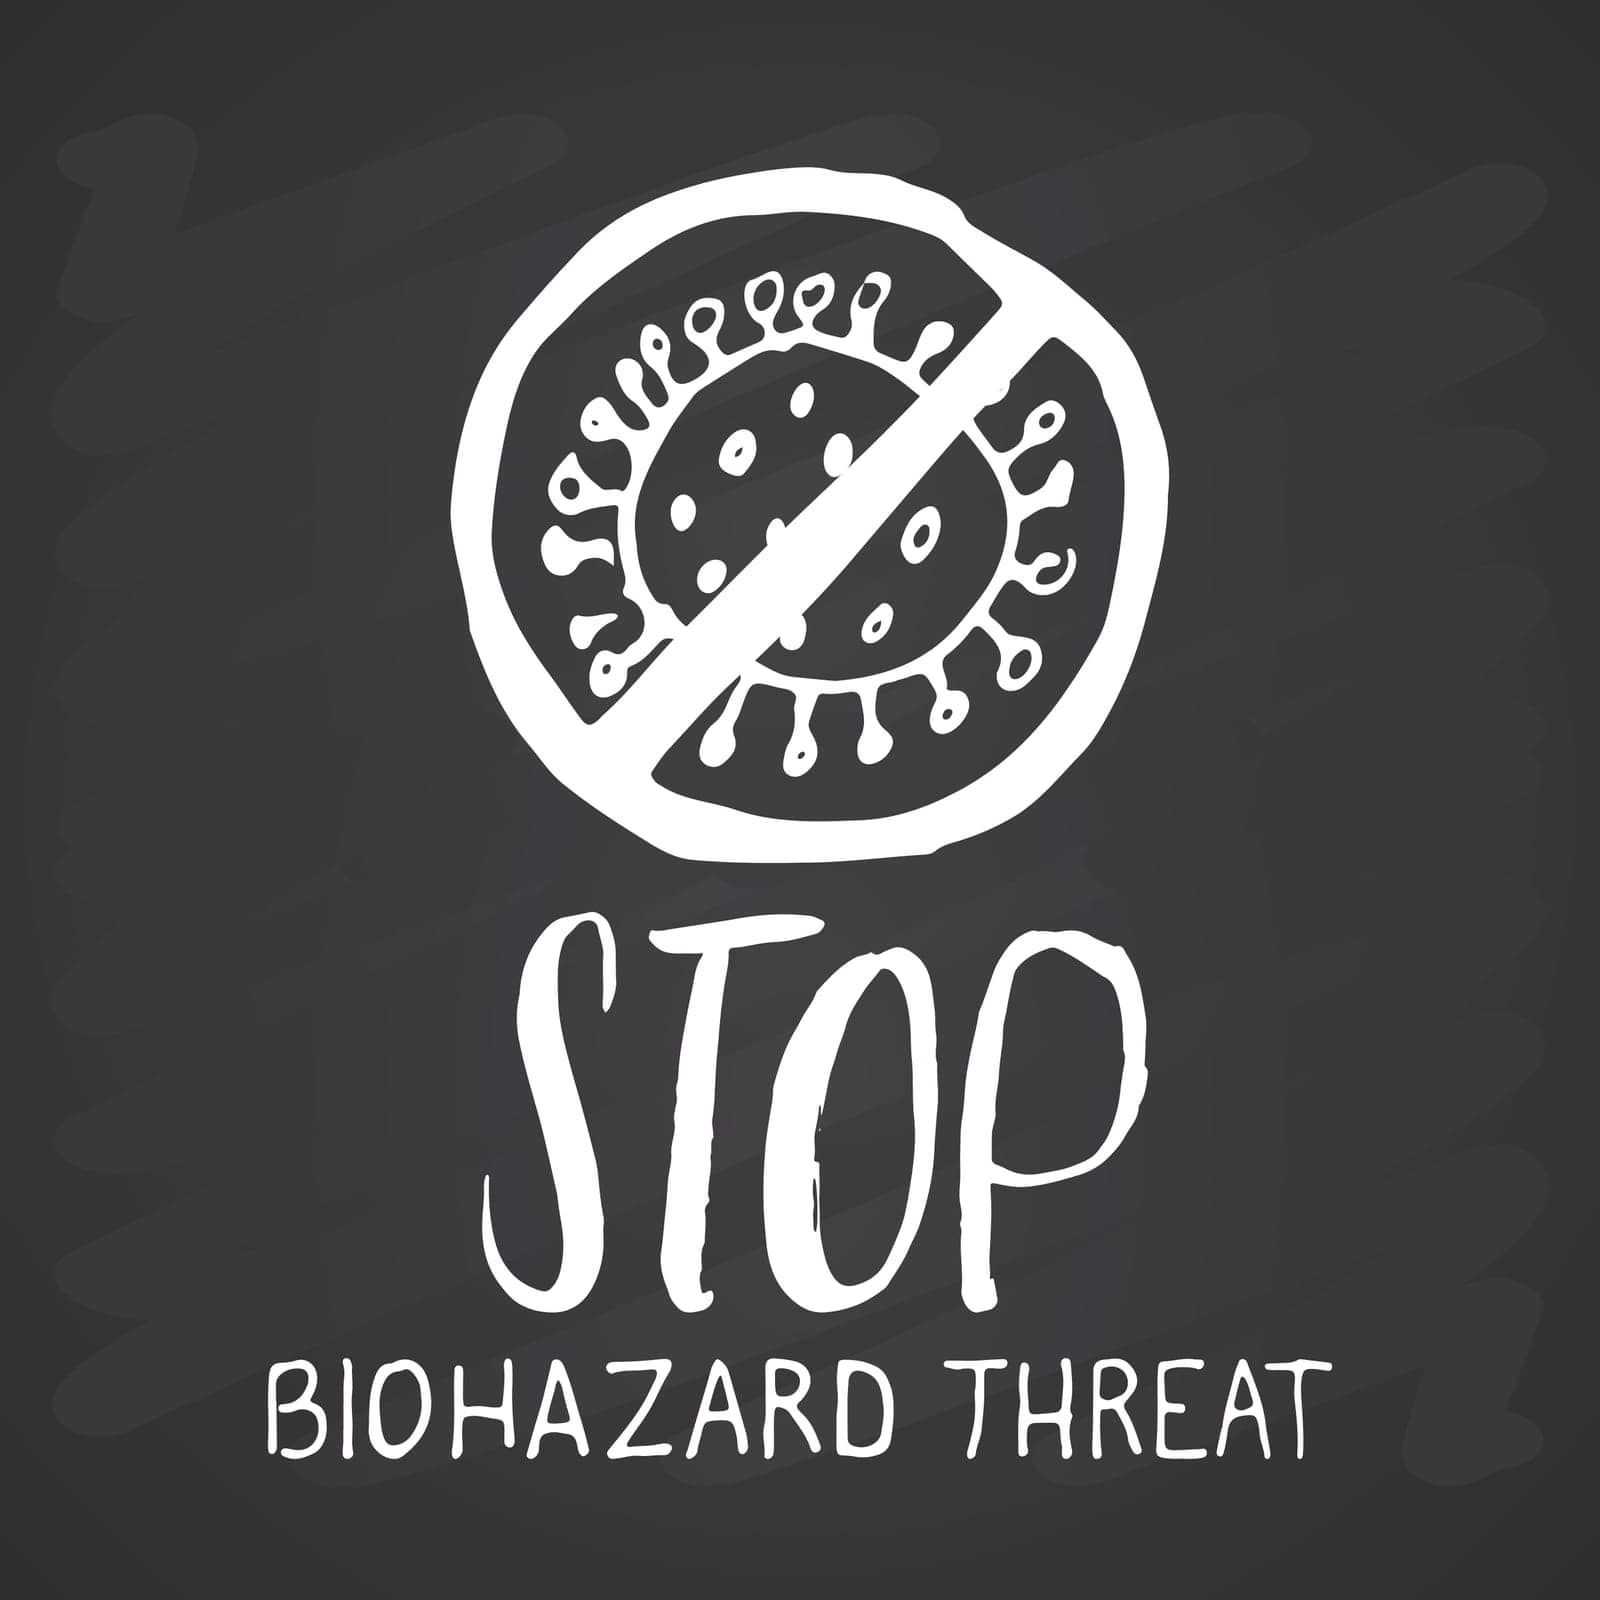 Biohazard threat lettering Hand Drawn icon. Vector illustration on chalkboard background by Lemon_workshop